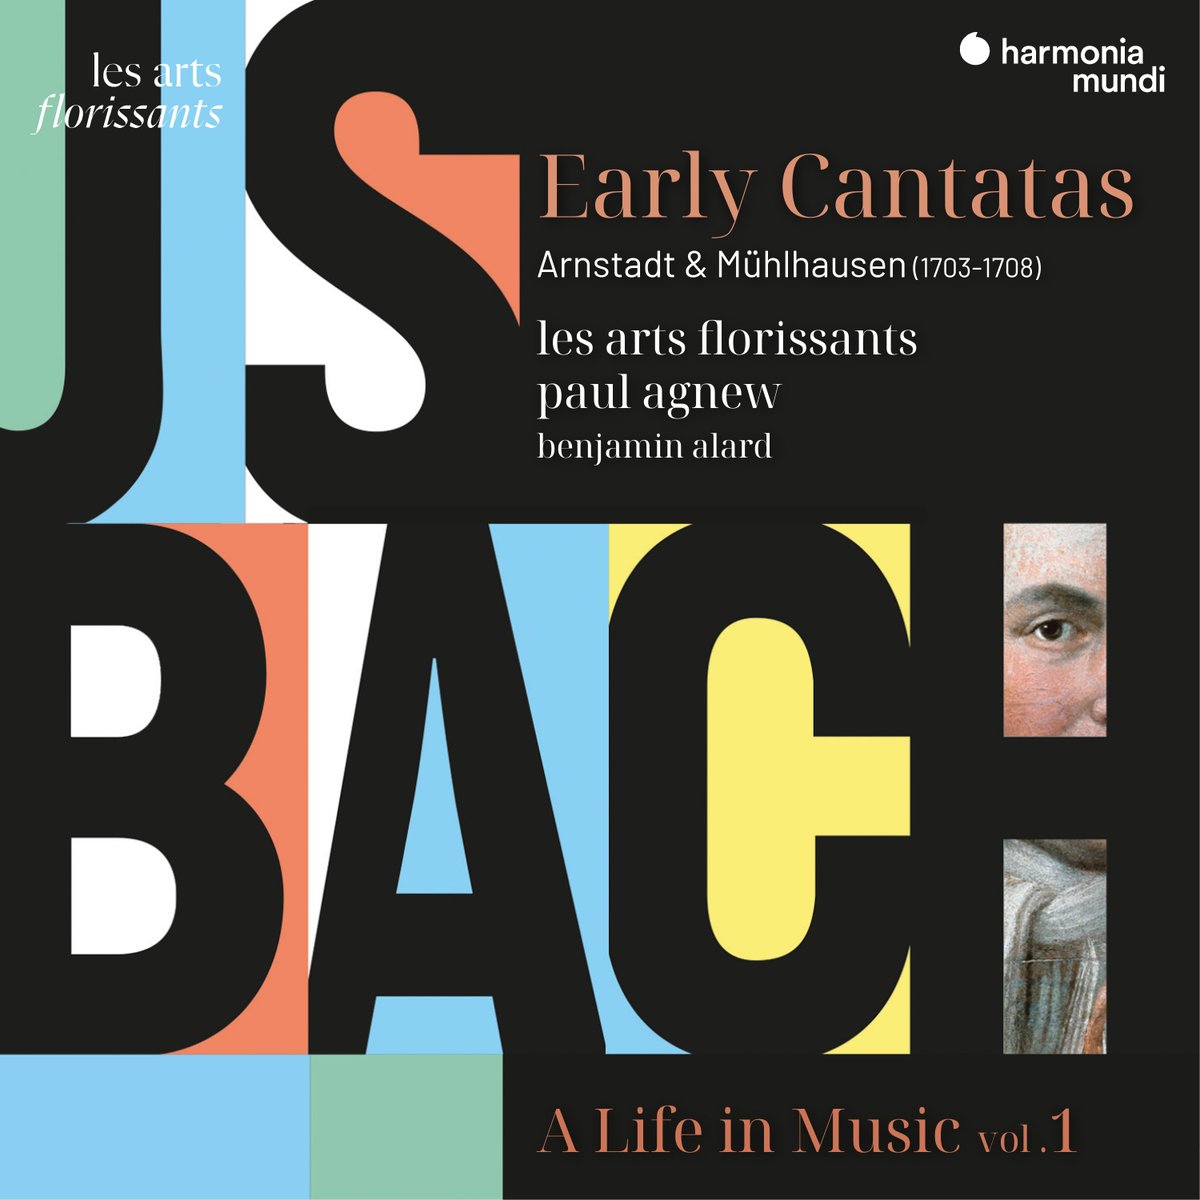 [NEW RELEASE] J.S Bach | A Life In Music vol. 1 @lesartsflo Paul Agnew @BenjaminAlard 🎧Ecoutez/listen: lnk.to/BachLifeInMusi… 👉Clip on YouTube: youtu.be/nQZs2TuweiY